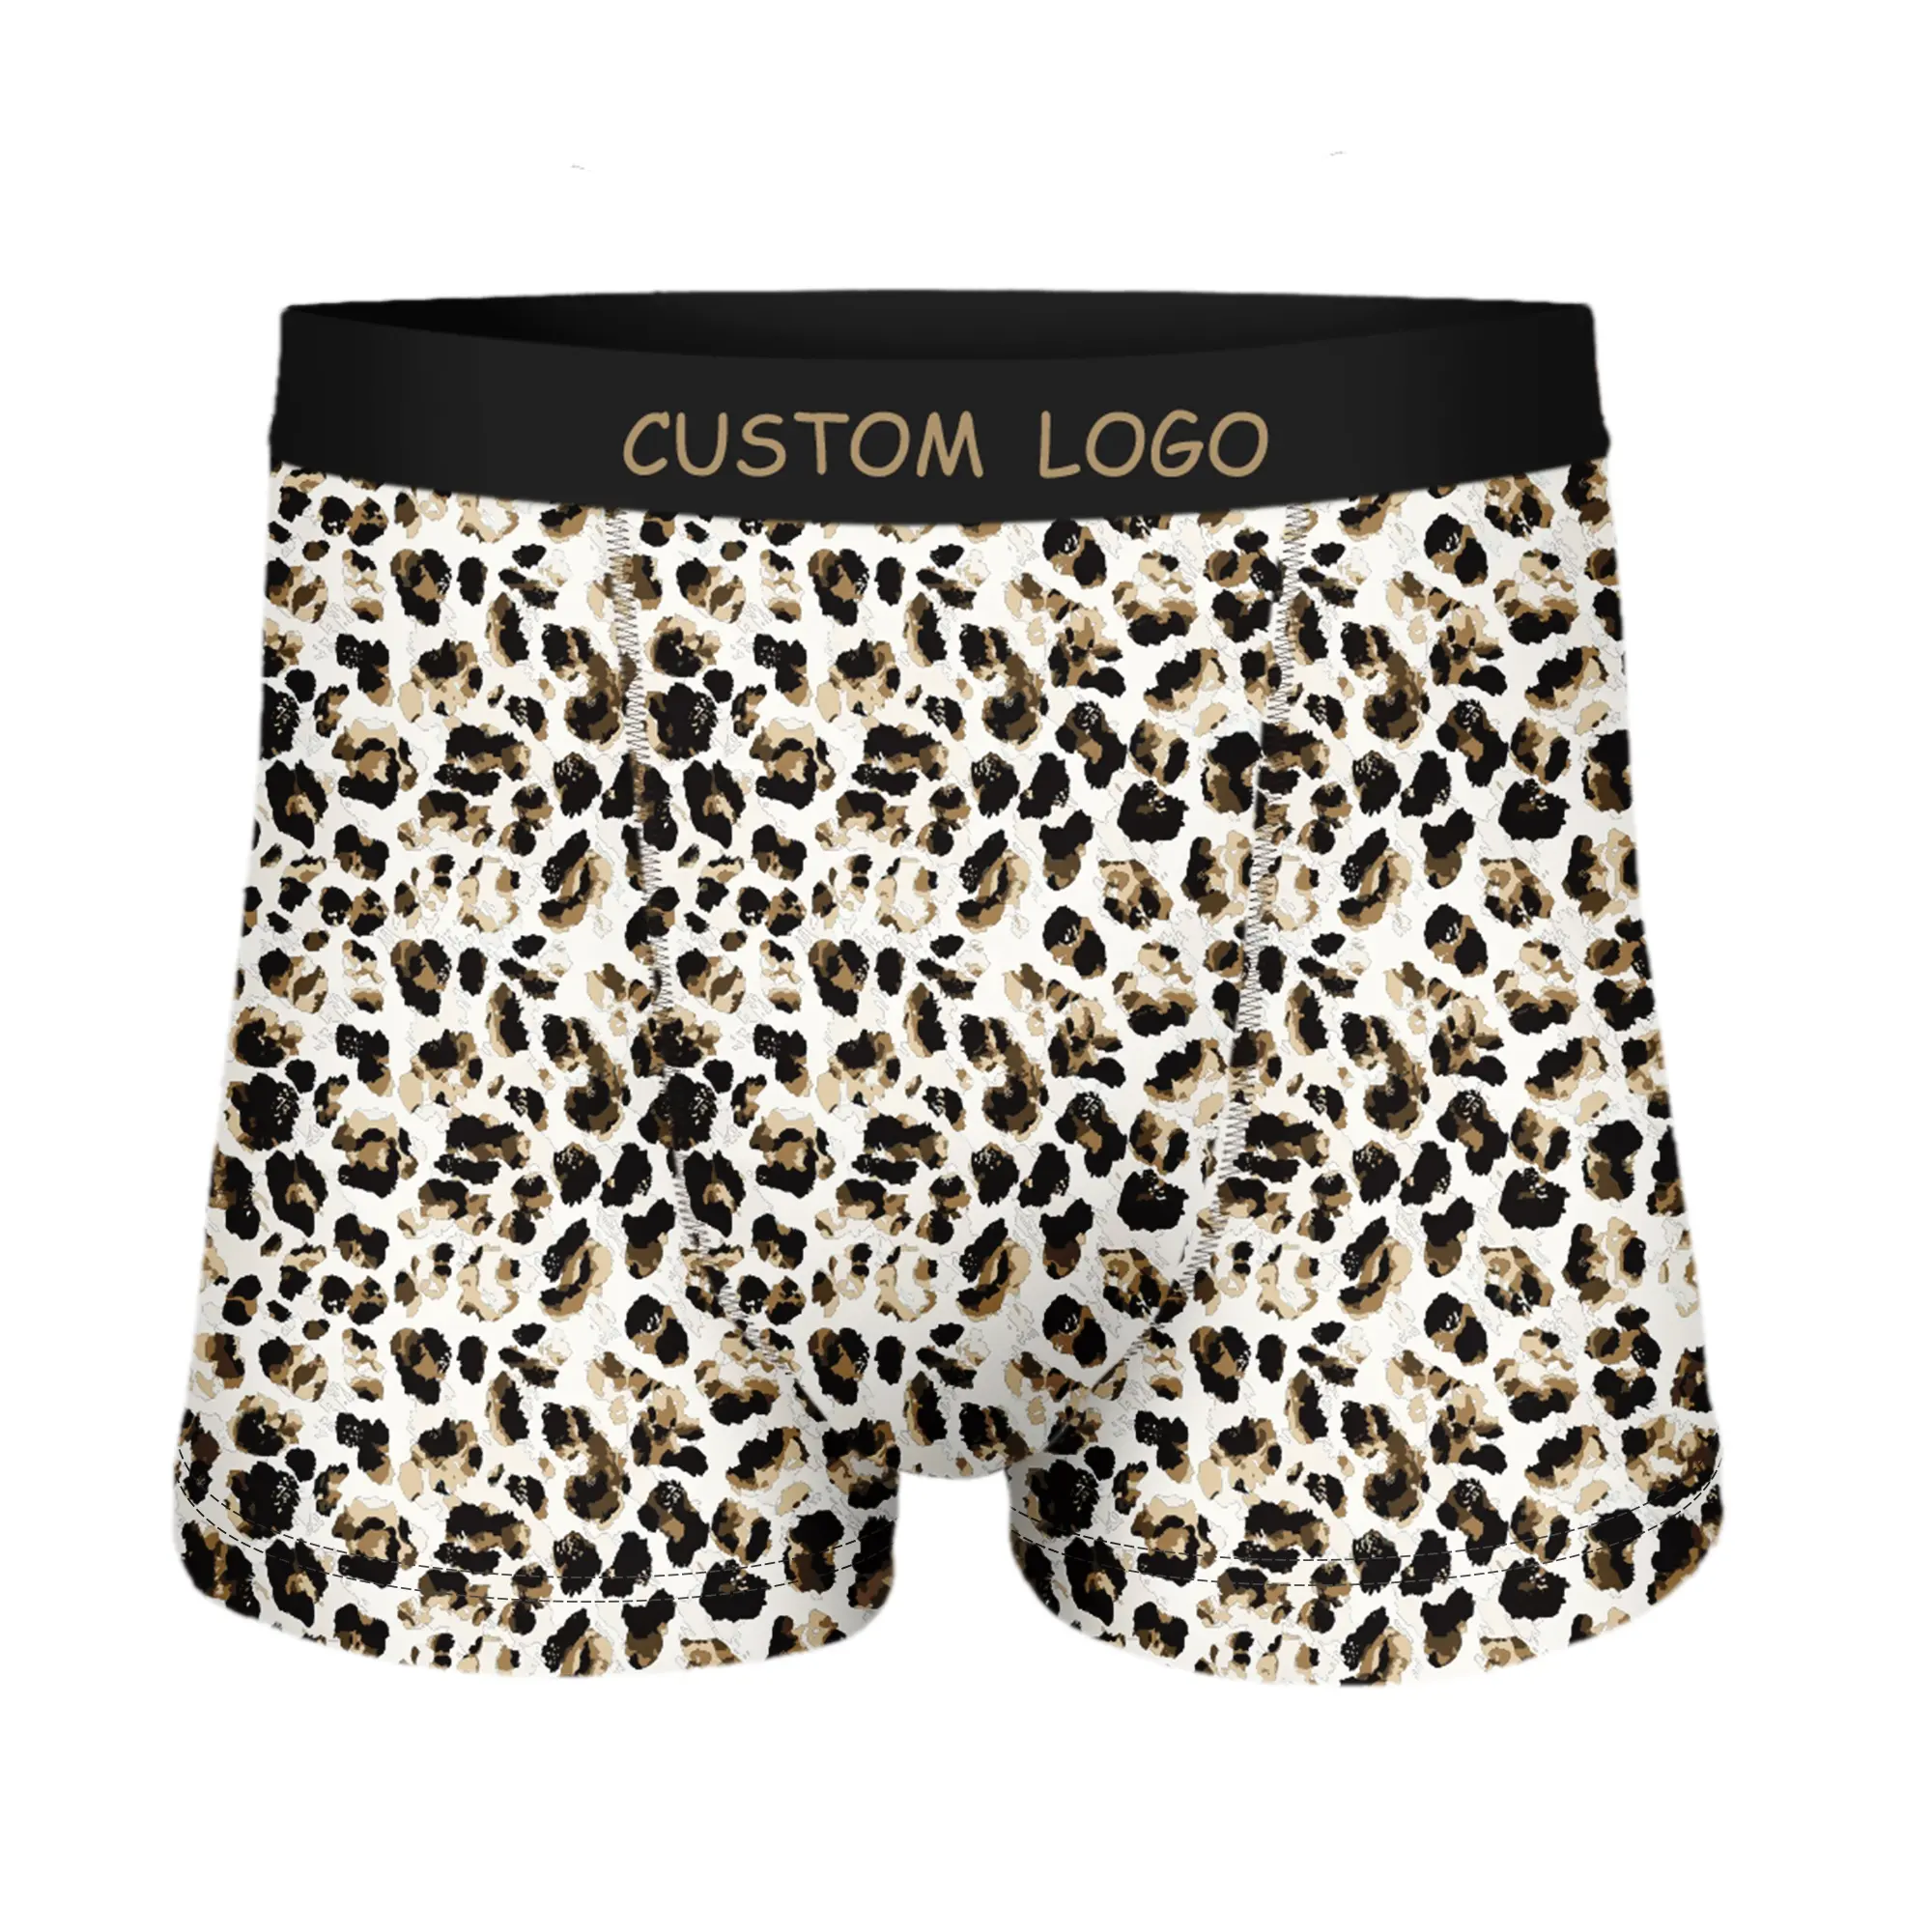 Leopard cheetah skin printed OEM Meiyang wholesale vendor custom mens new underwear Fashion mix style boxers briefs for man